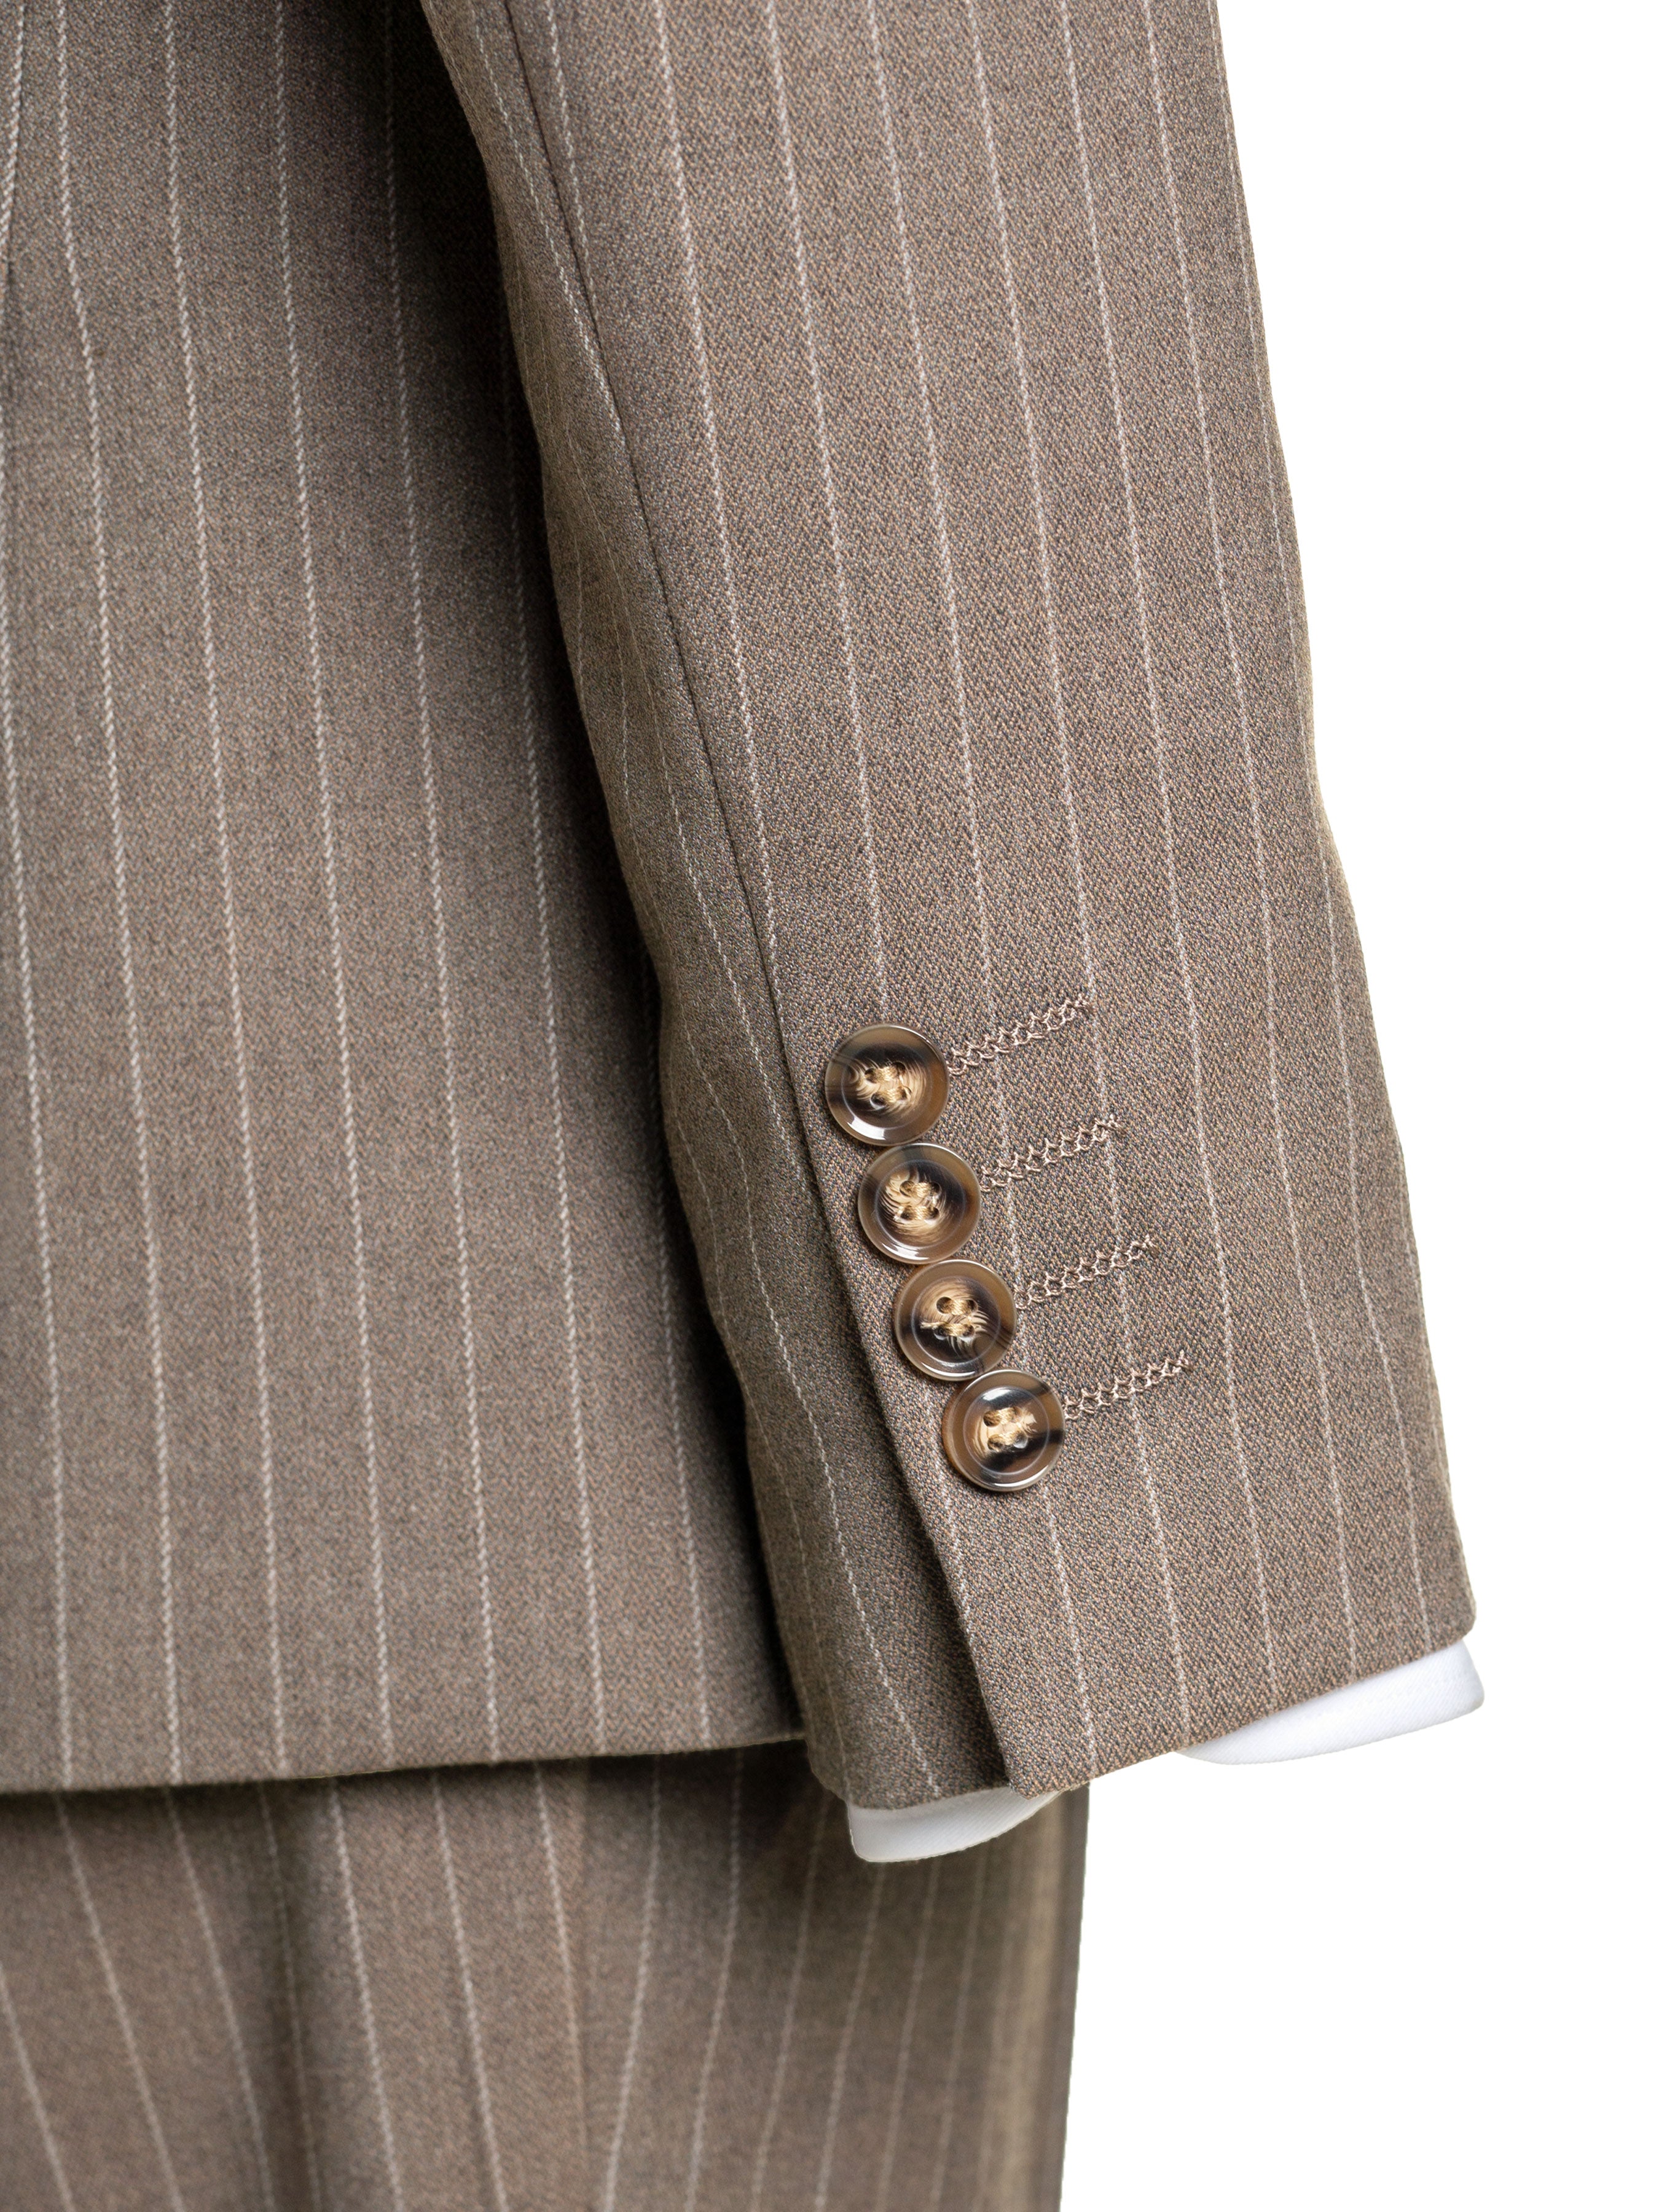 Double Breasted Suit Blazer - Brown Pinstripes (Peak Lapel) - Zeve Shoes